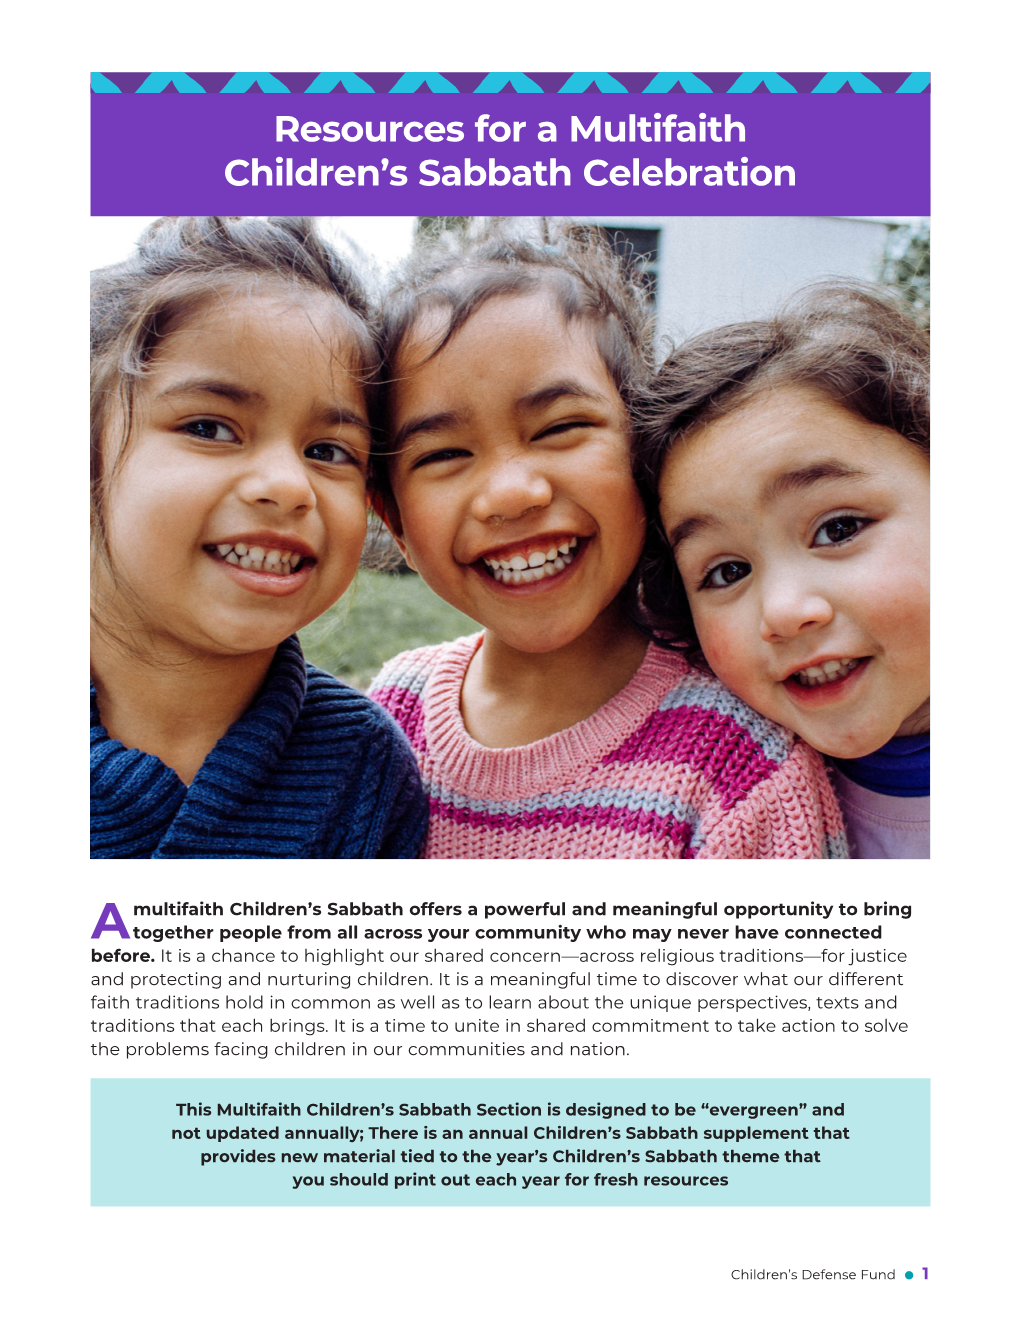 Multi-Faith Resources for the Children's Sabbath